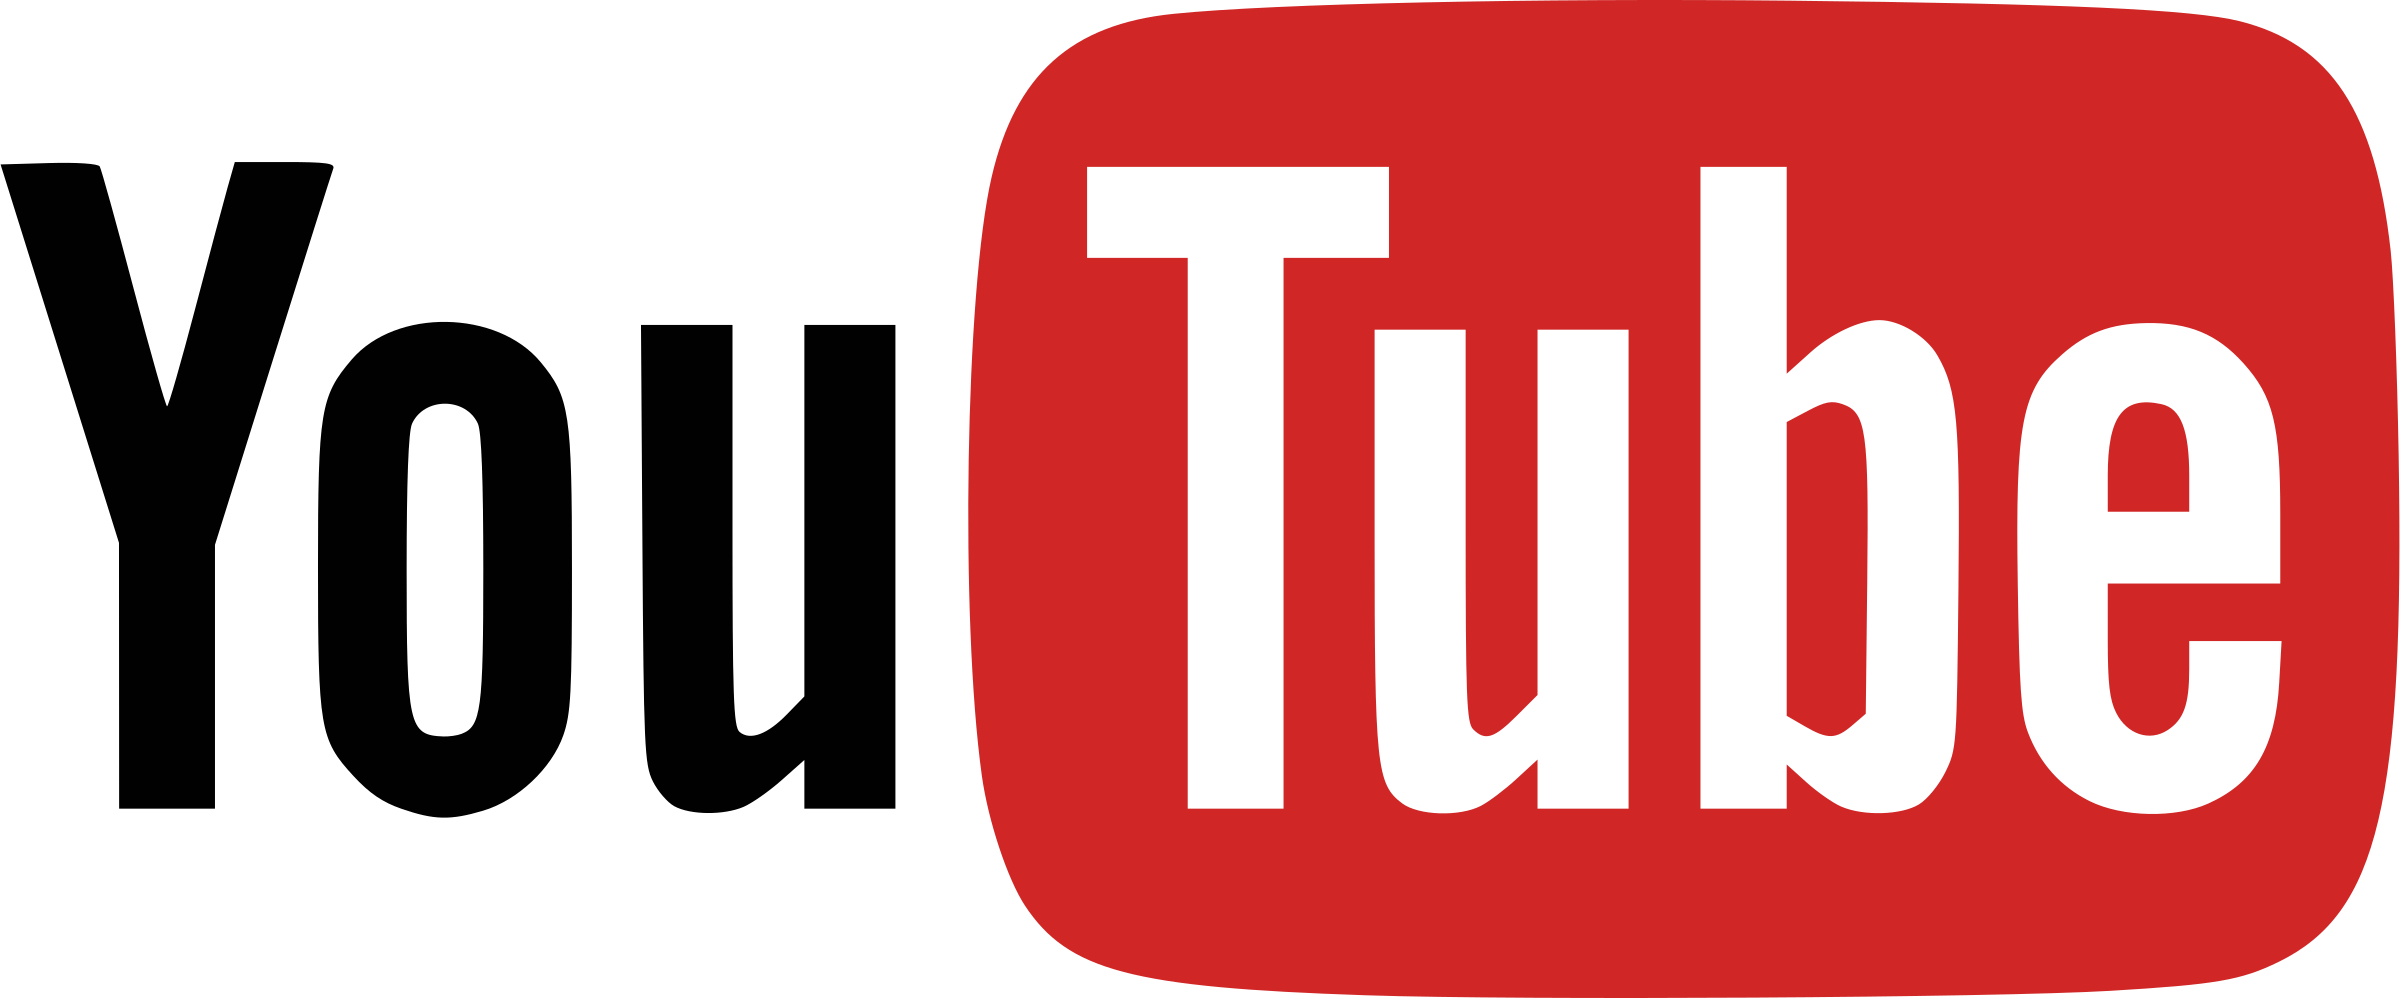 White YouTube Logo - YouTube Logo PNG Transparent & SVG Vector